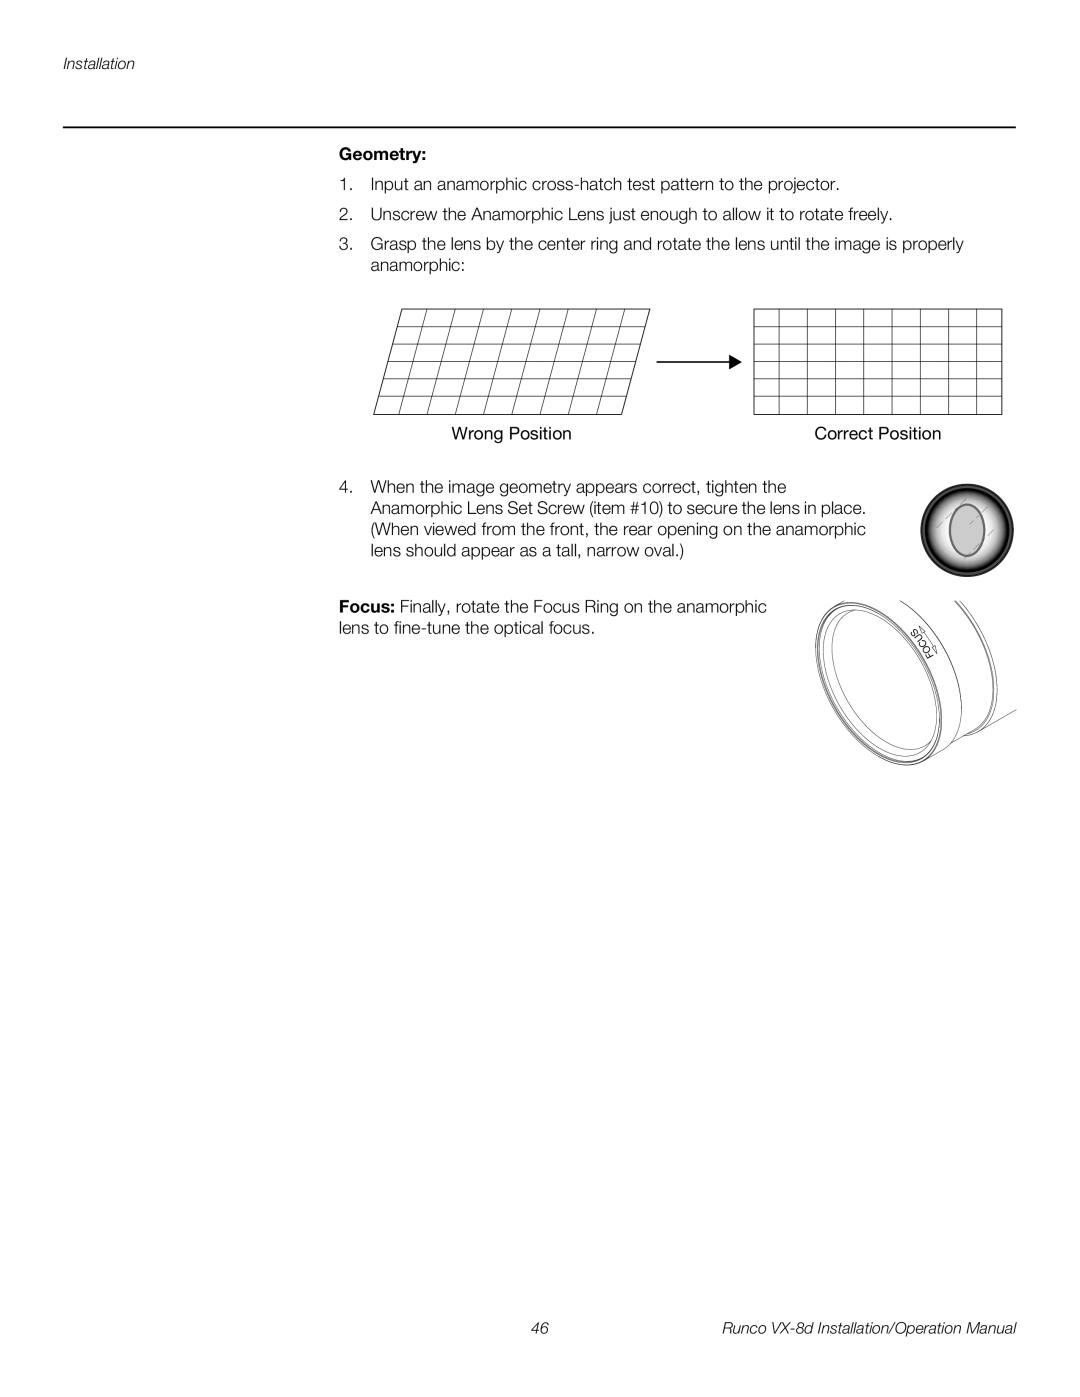 Runco VX-8D operation manual Geometry 